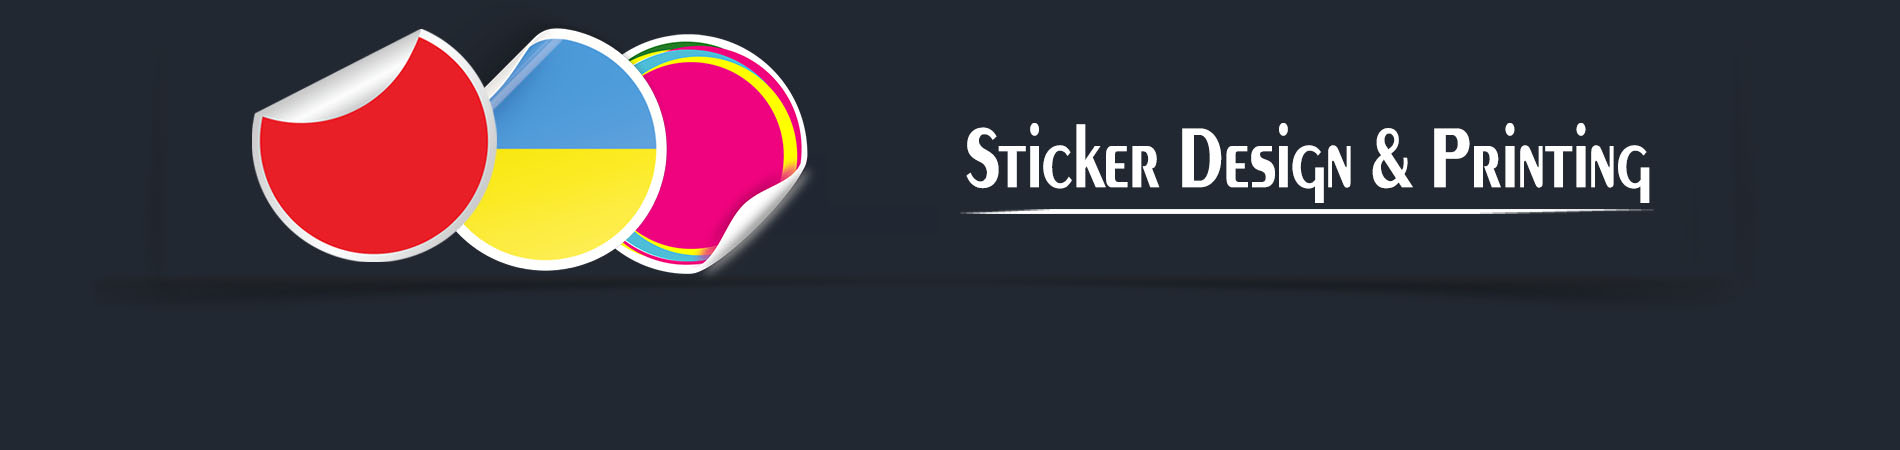 Sticker Design & Printing in India